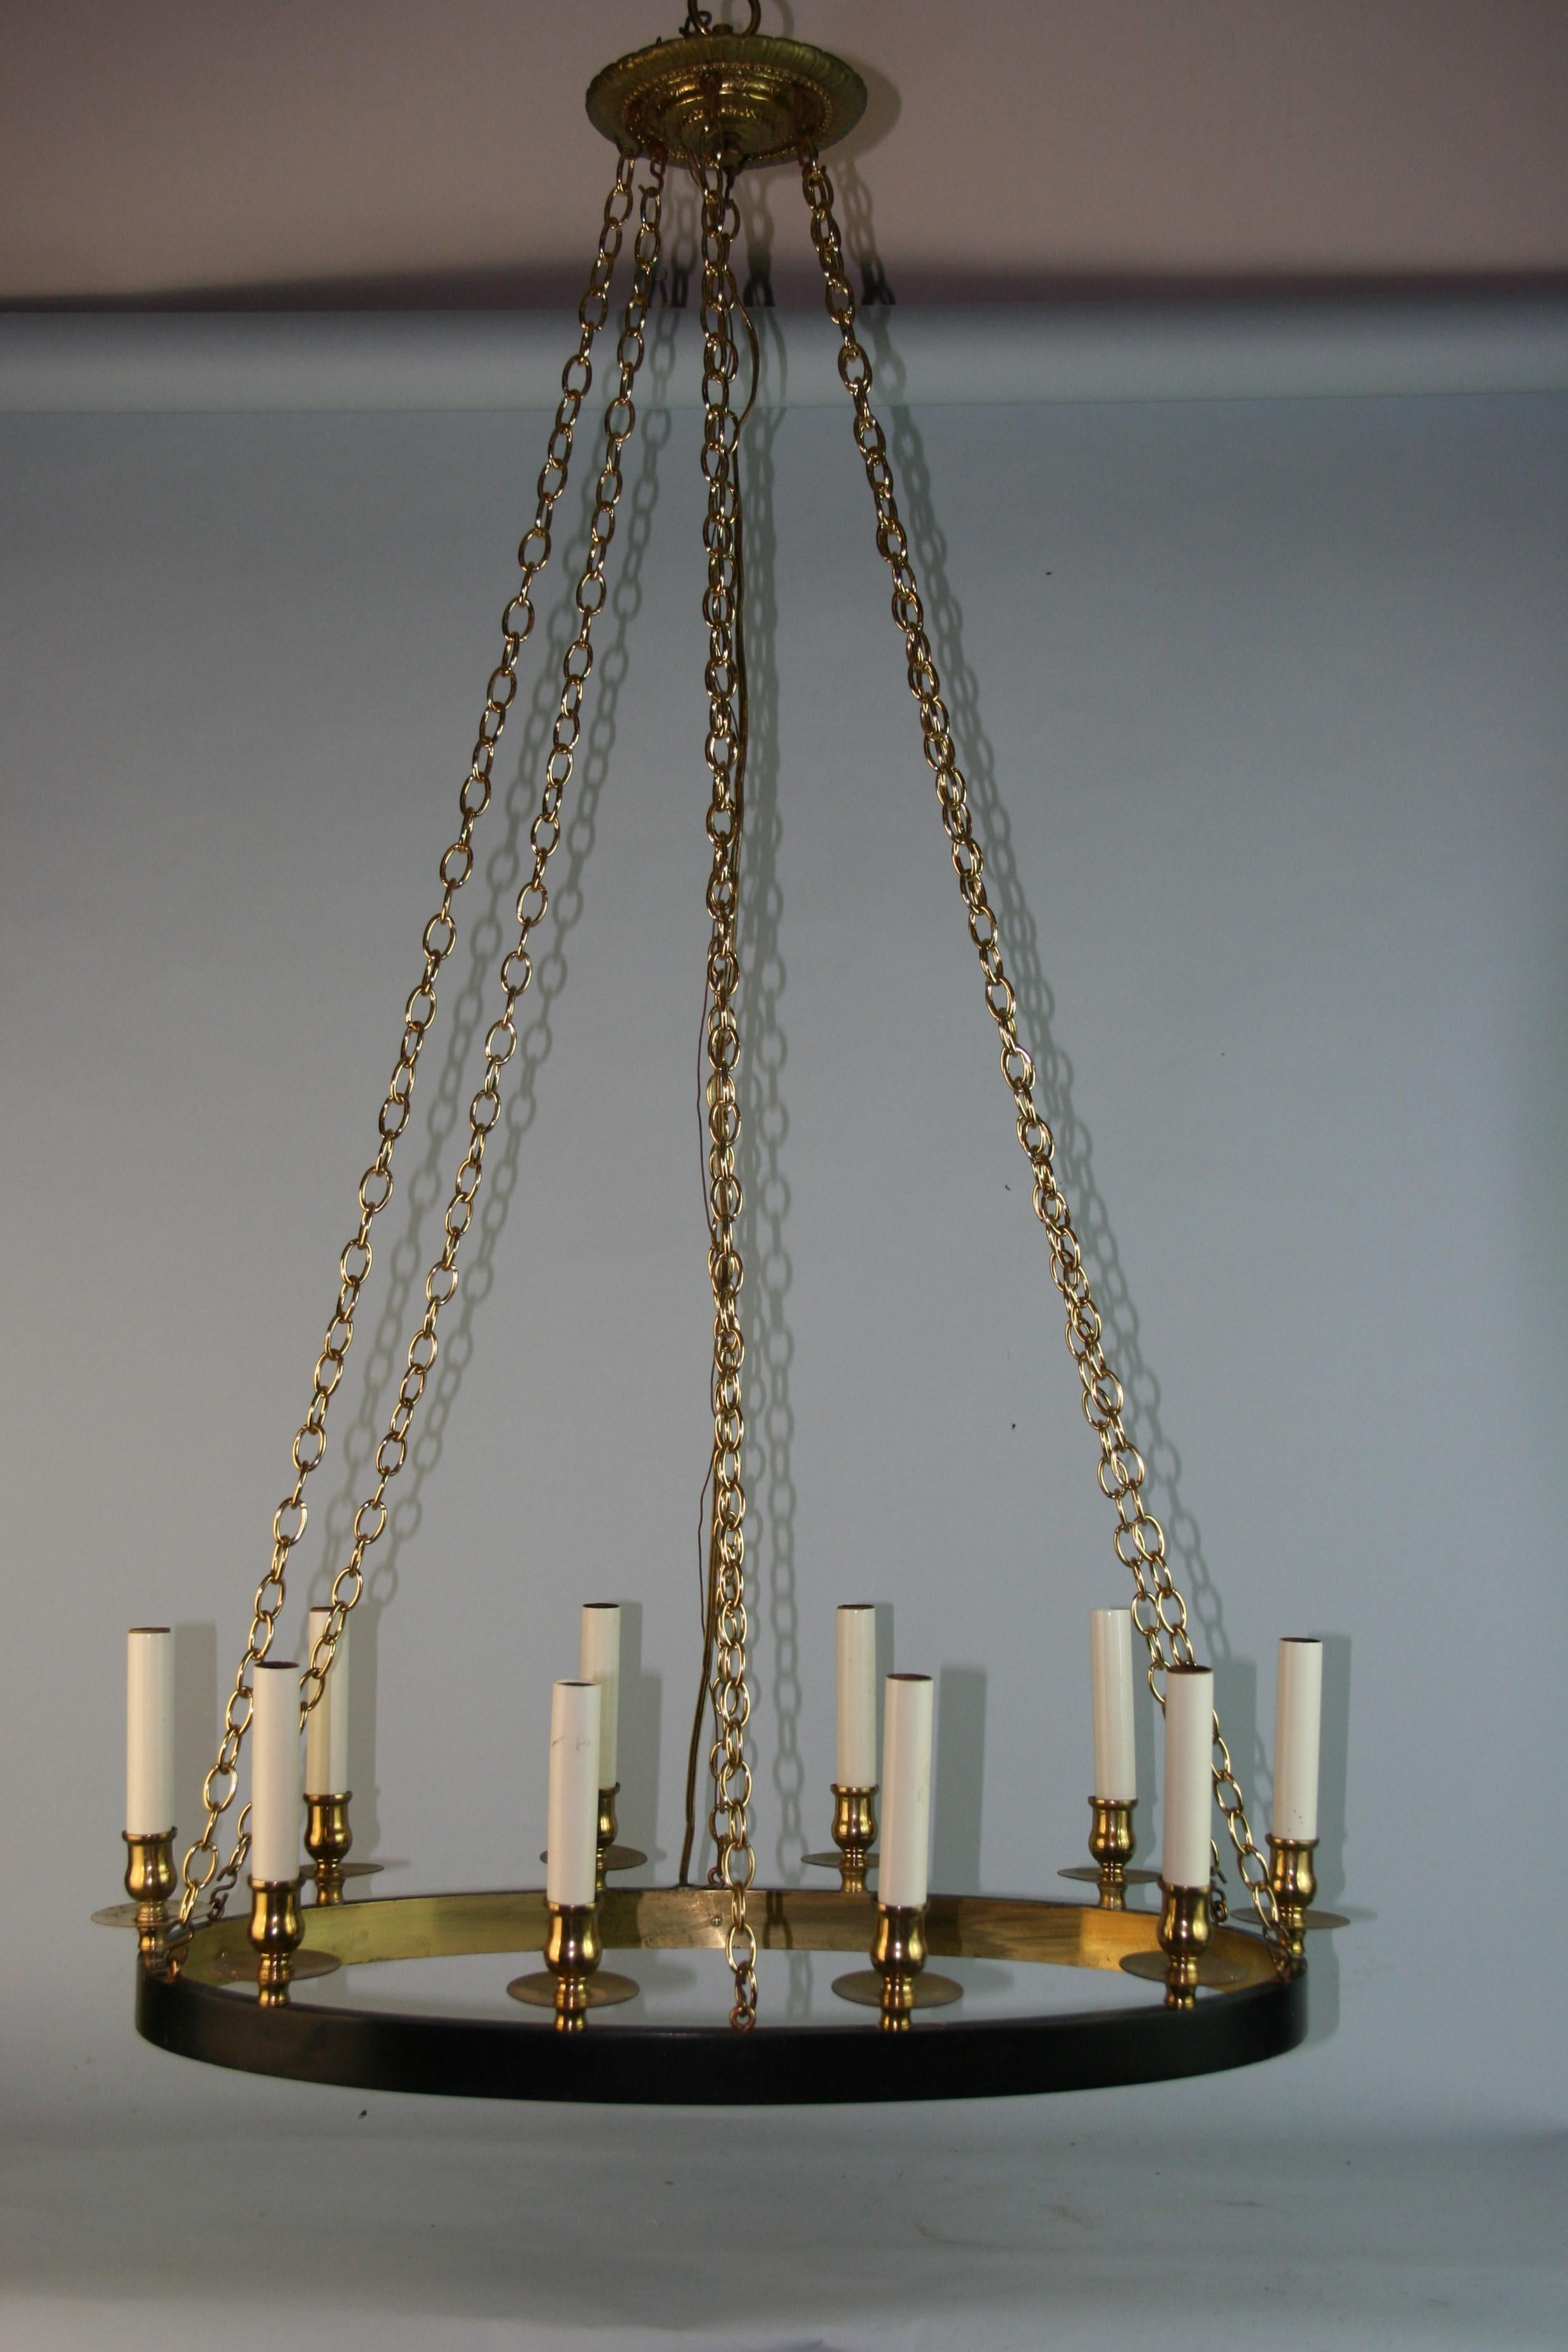 1311 French 10 light oval brass chandelier
Takes 10 25 watt candelabra based bulbs.